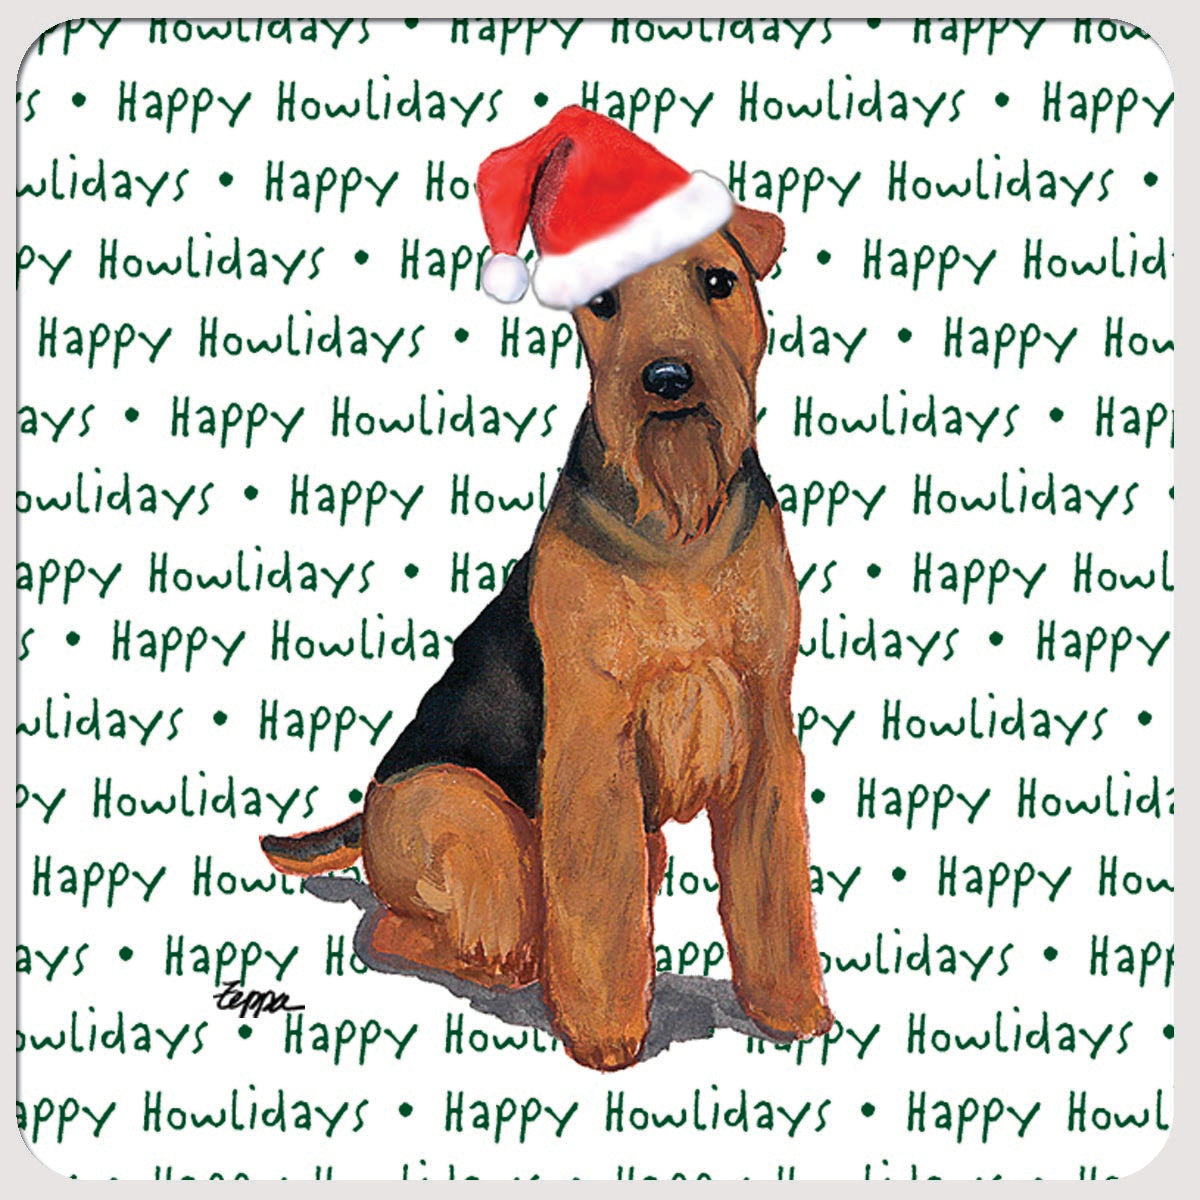 Welsh Terrier Christmas Coasters